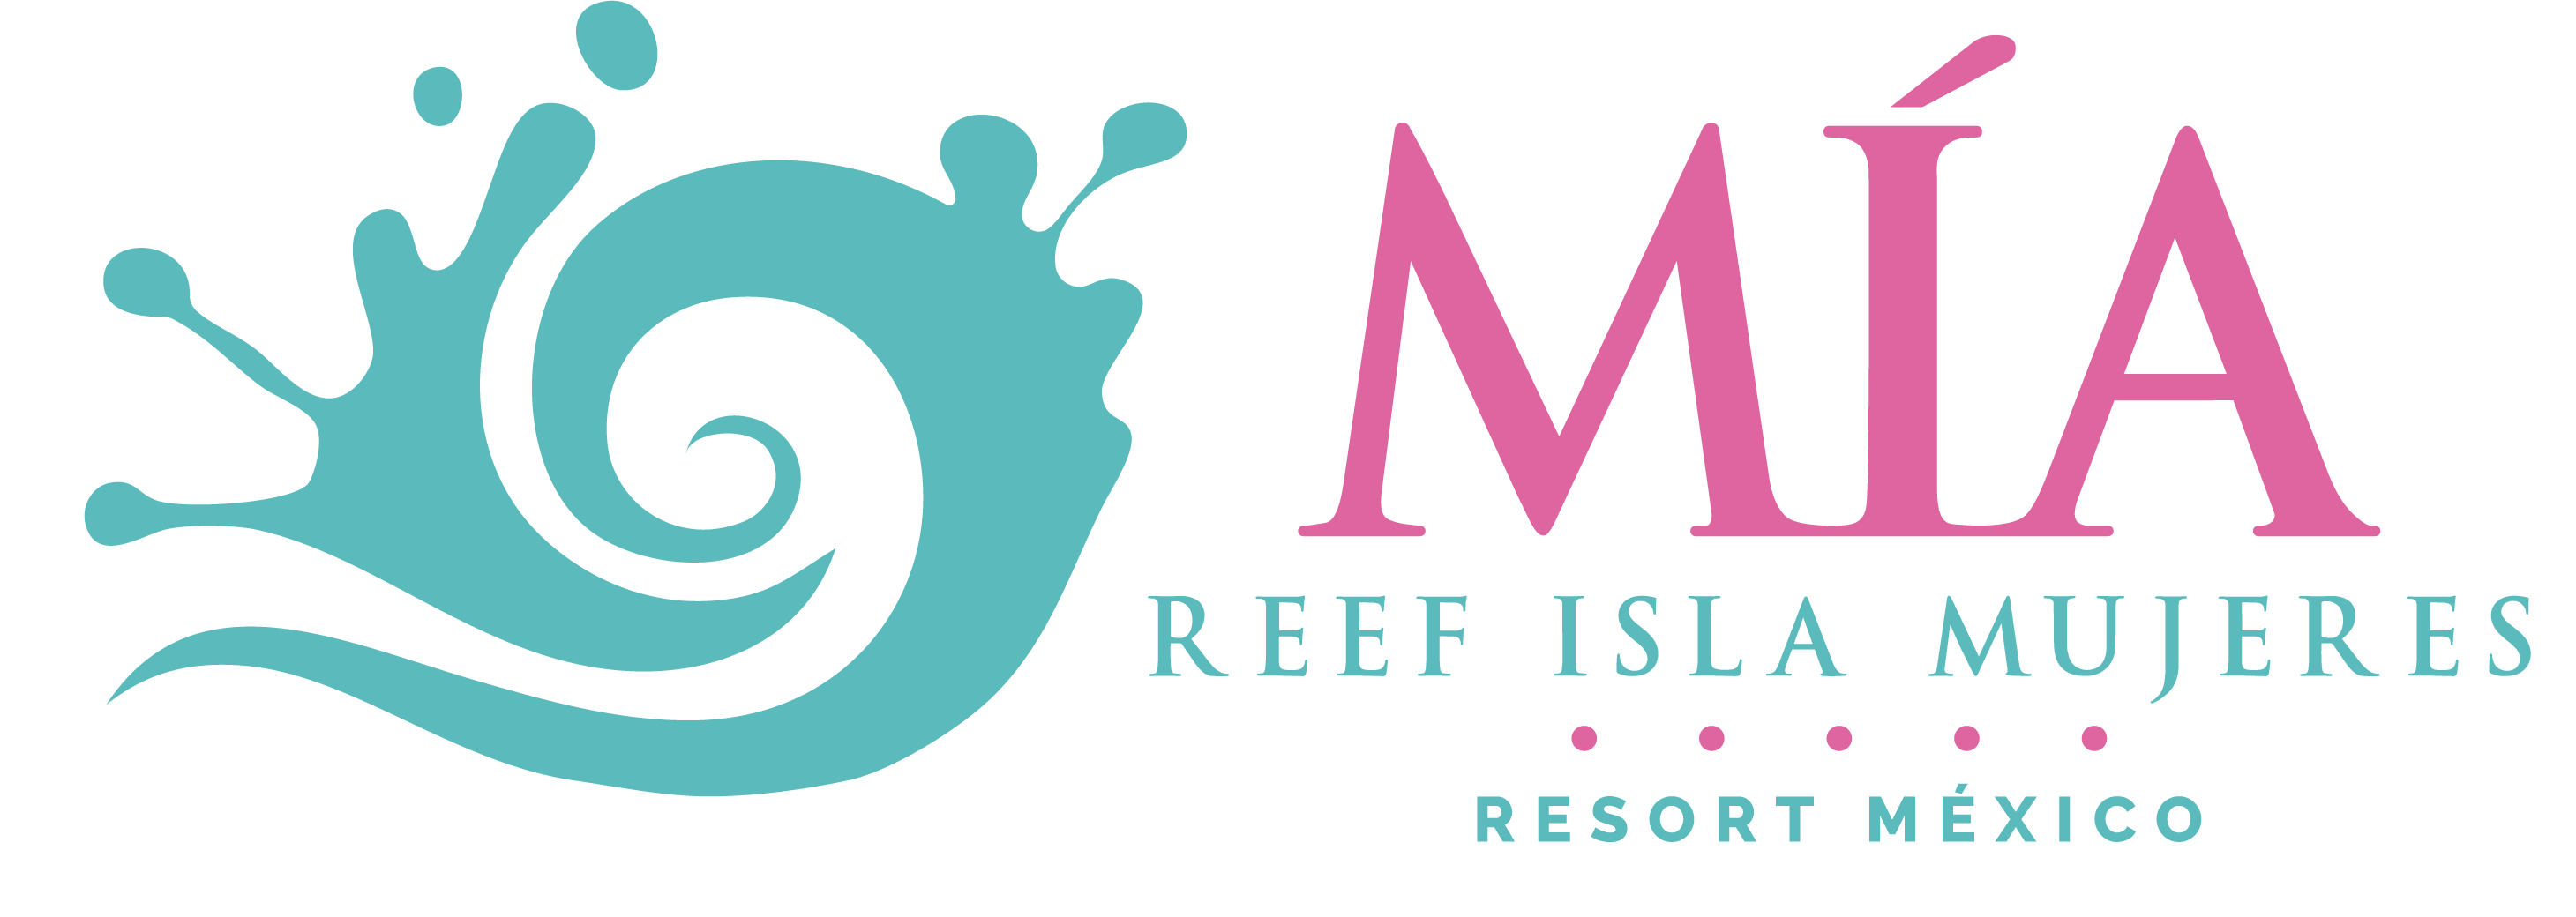 Isla Mujeres Hotels & Resort